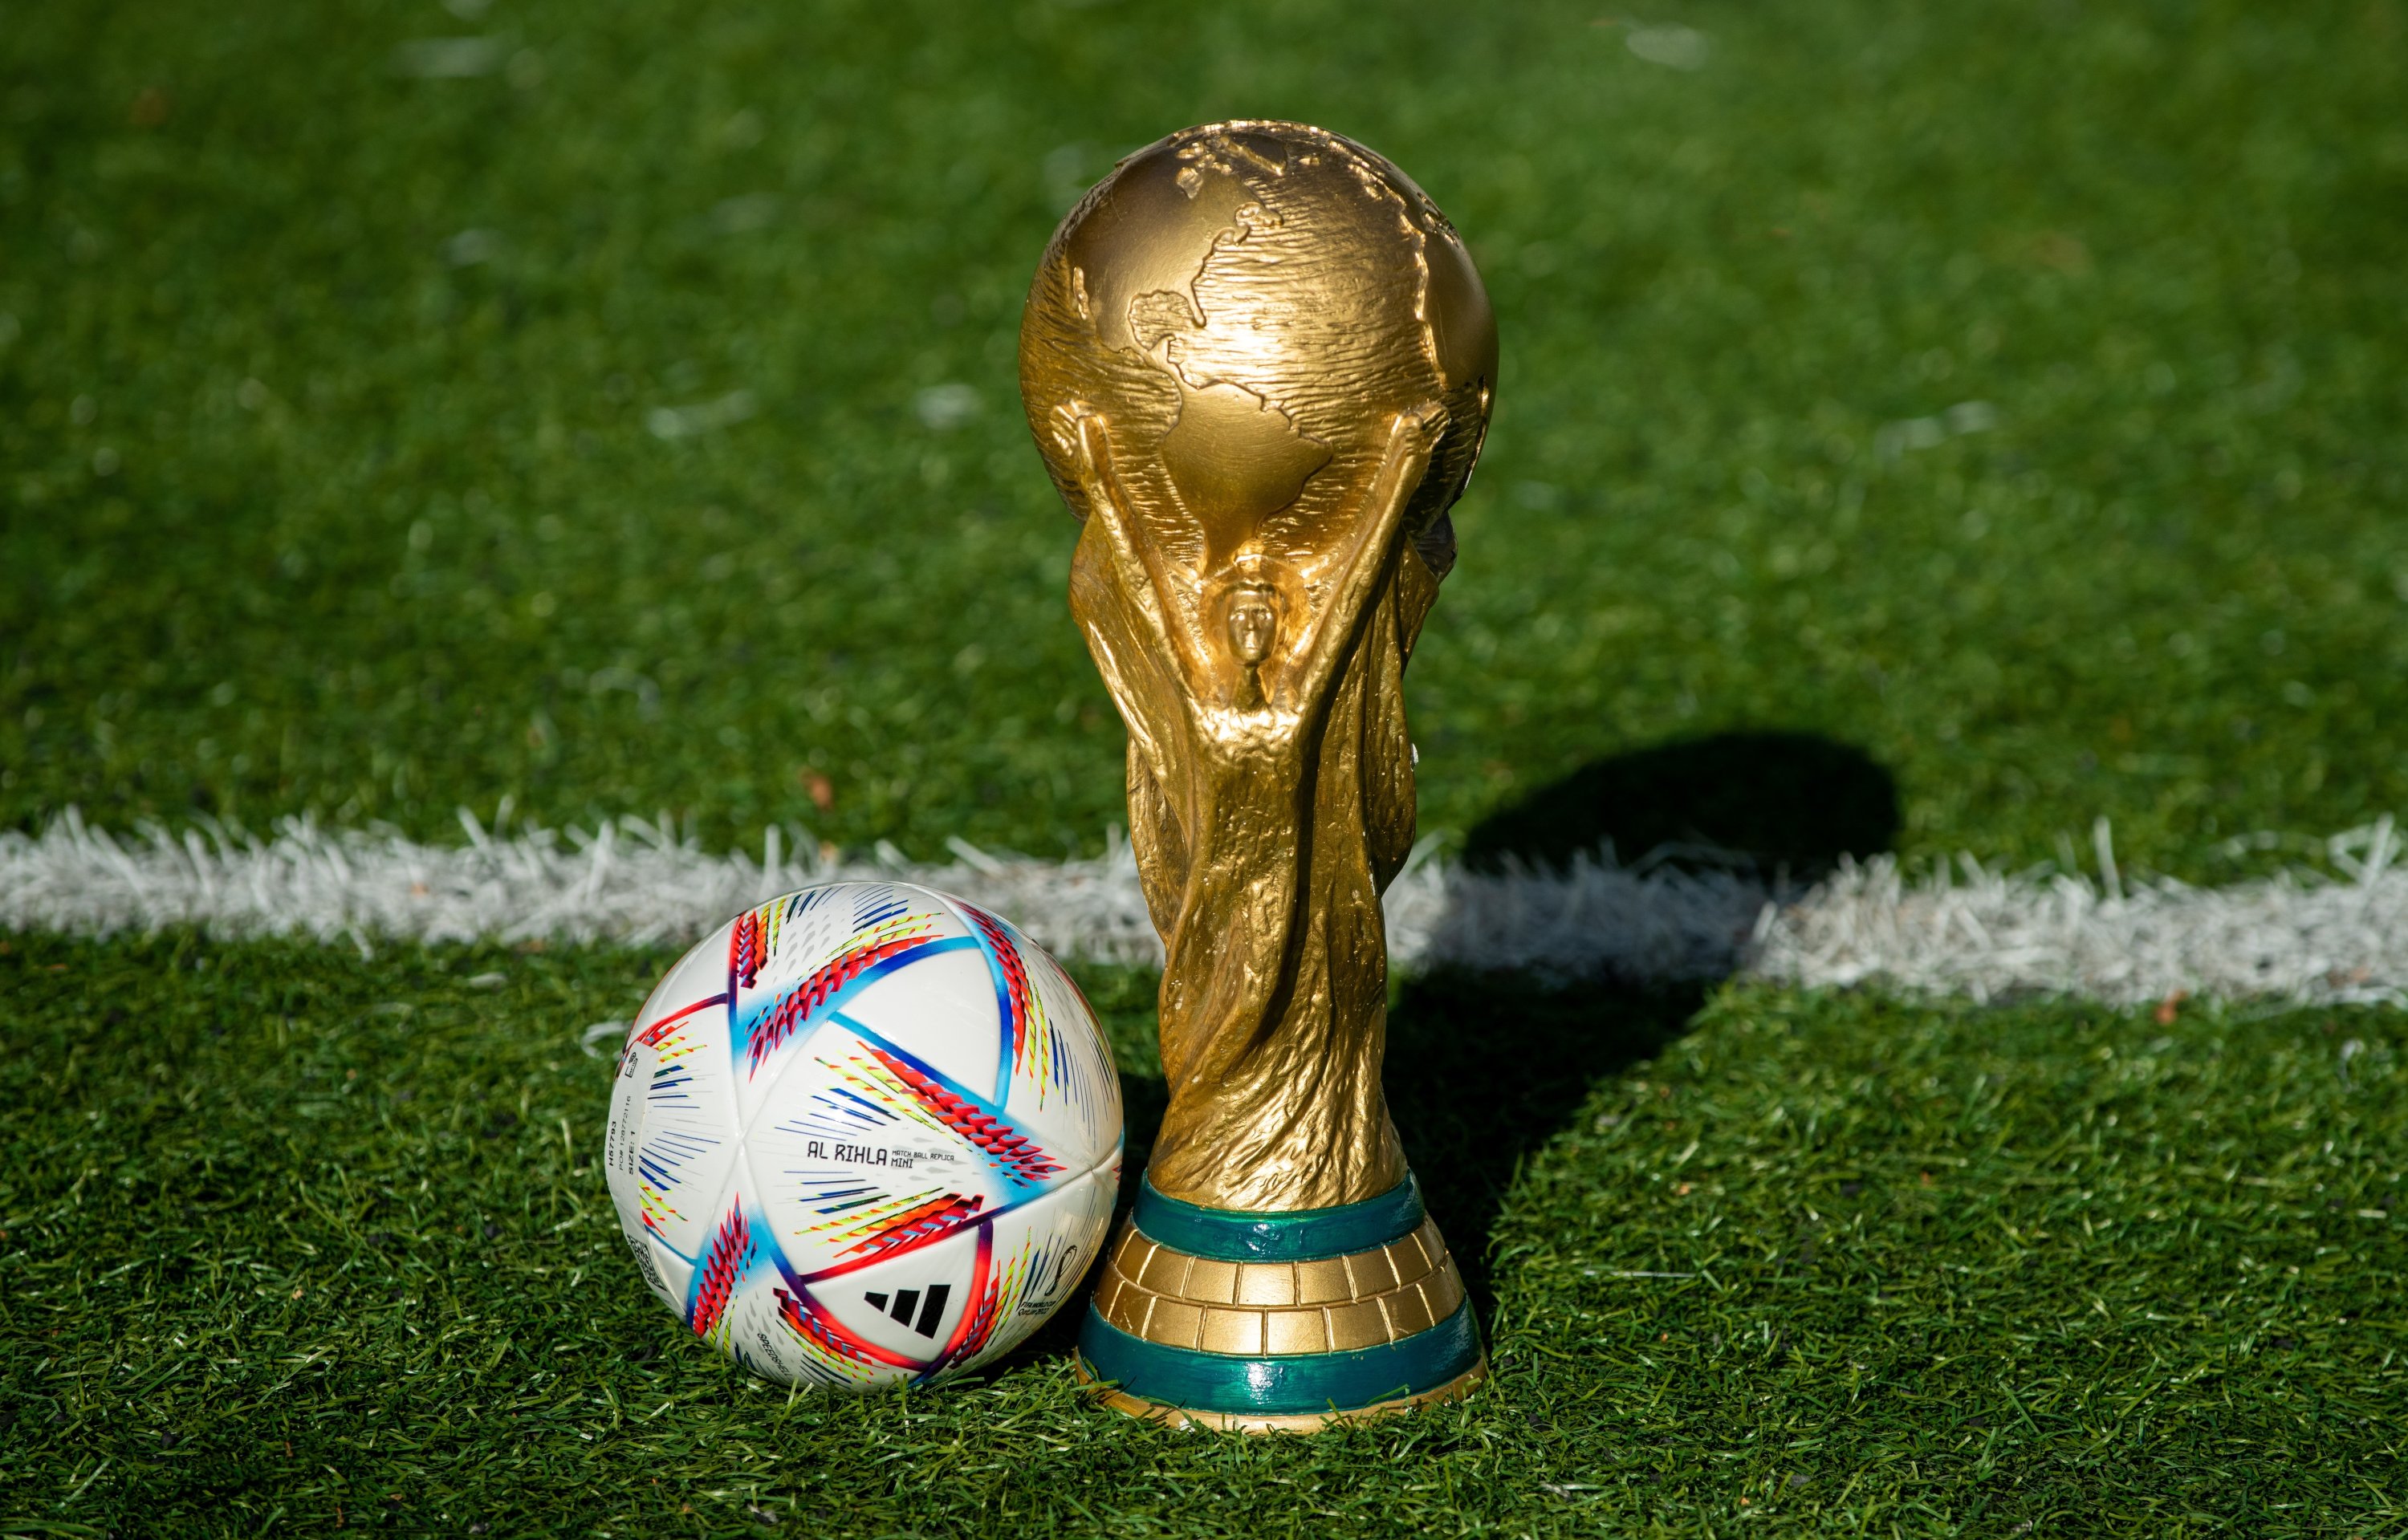 2022 FIFA World Cup - Qatar